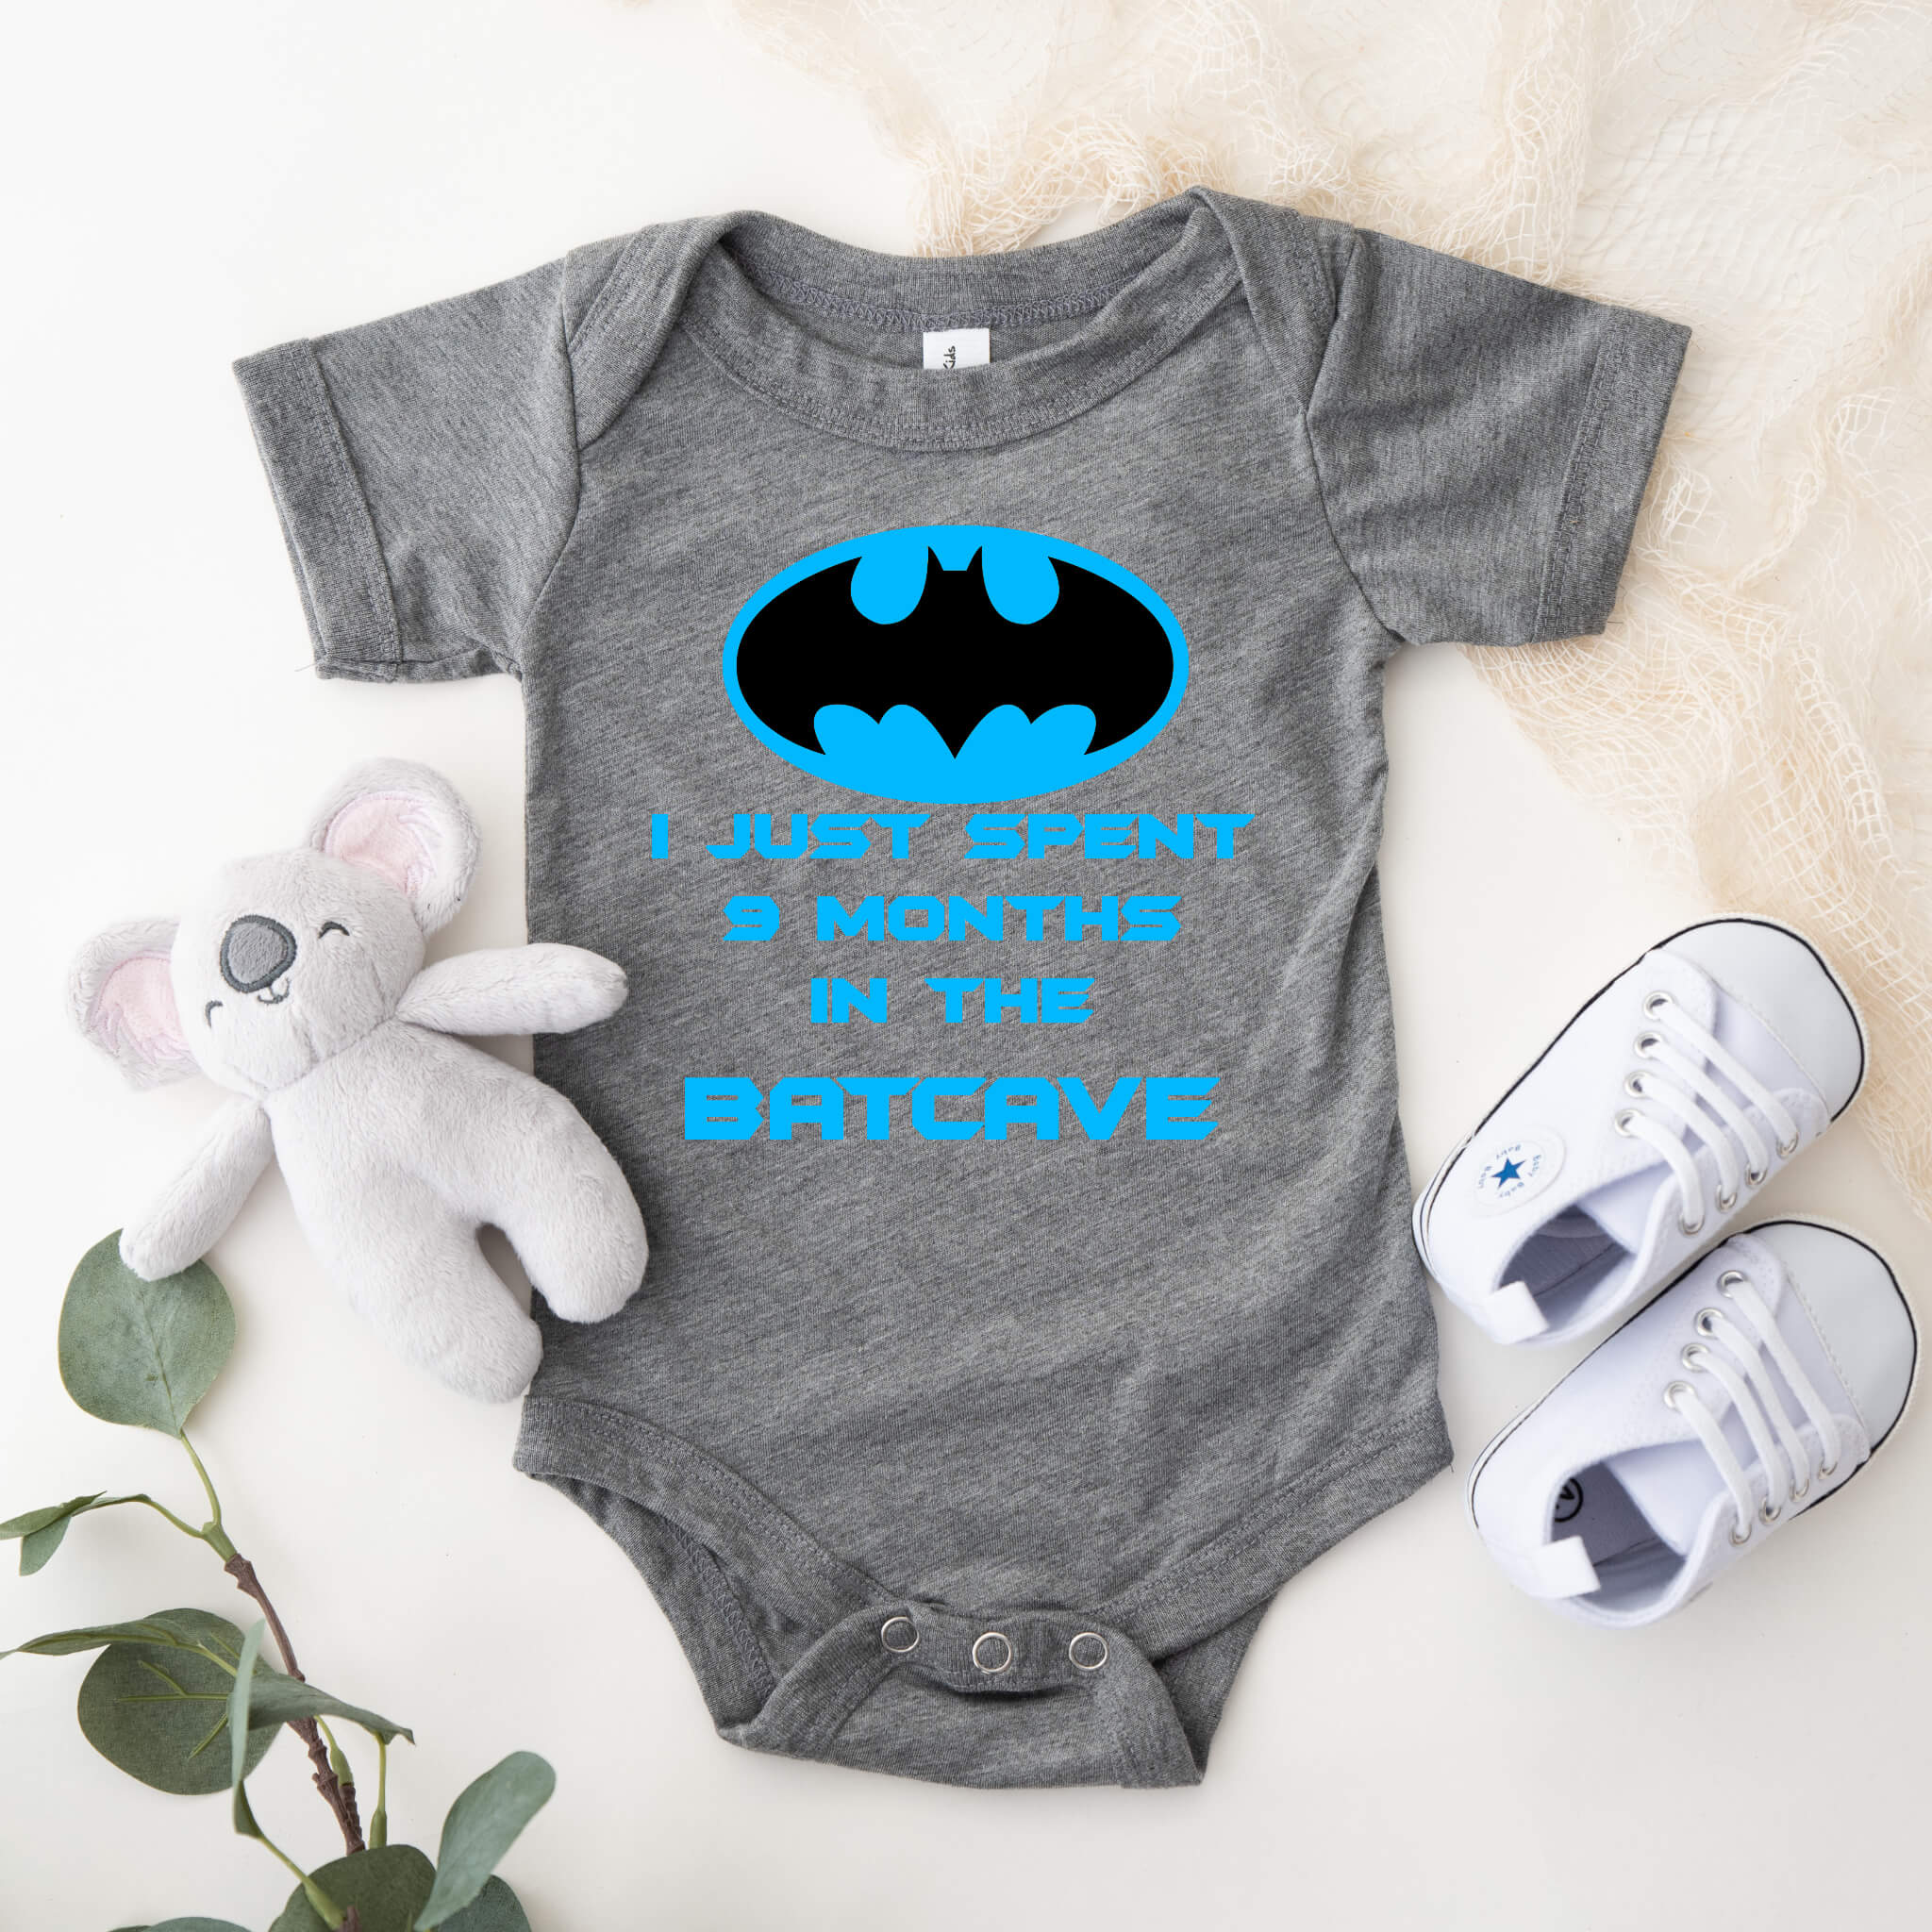 New Baby Onesie, Batman Themed Baby Boy’s, or Girl’s Onesie